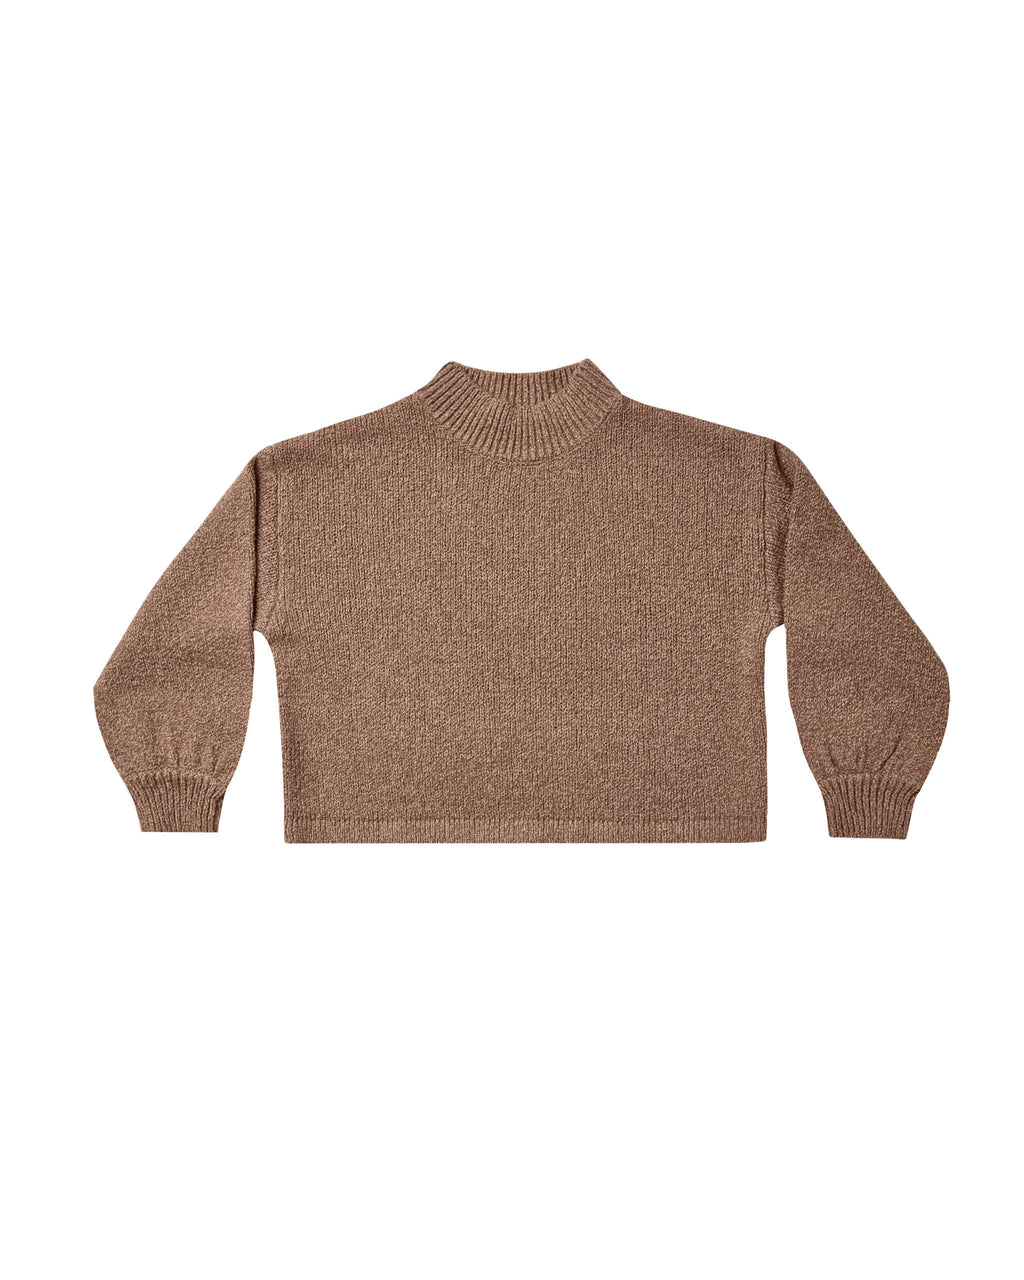 Rylee + Cru Knit Sweater - Heathered Mocha